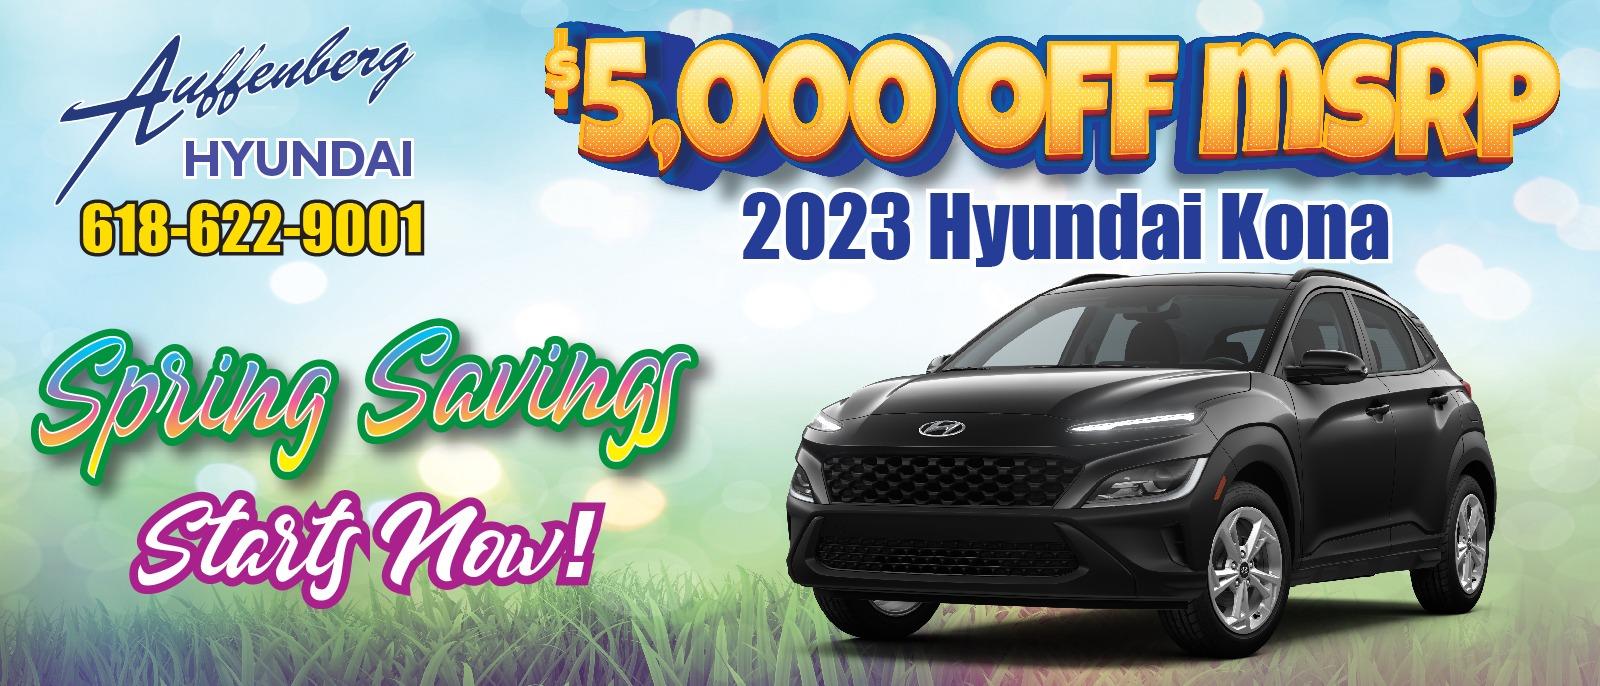 2023 Hyundai Kona
$5000 off